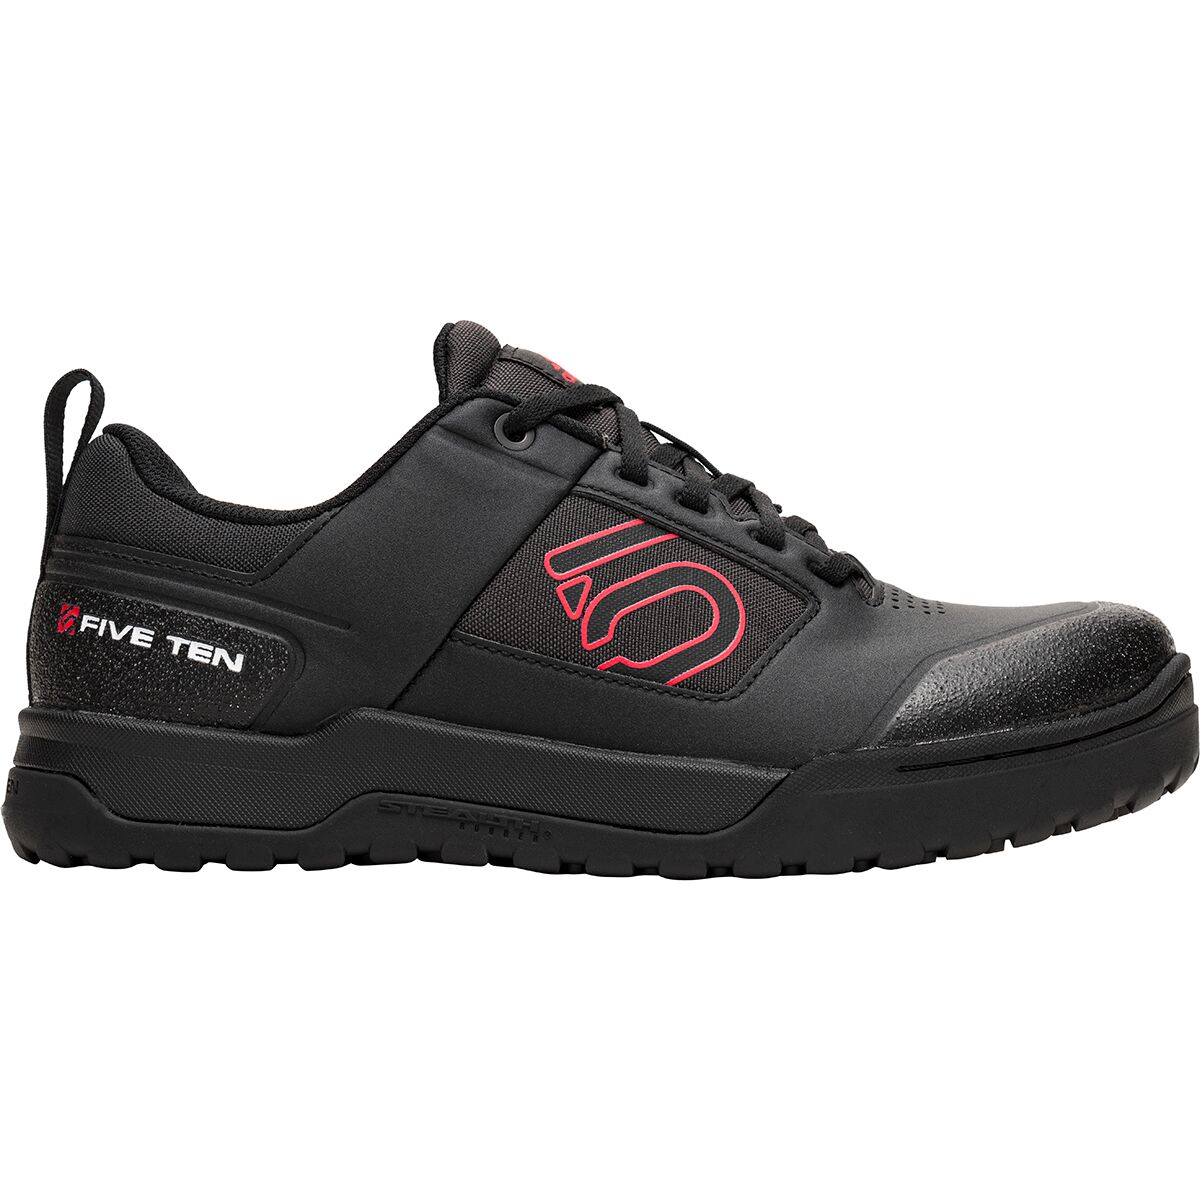 Five Ten Impact Pro Cycling Shoe - Men's Core Black/Red/Ftwr White, 9.0